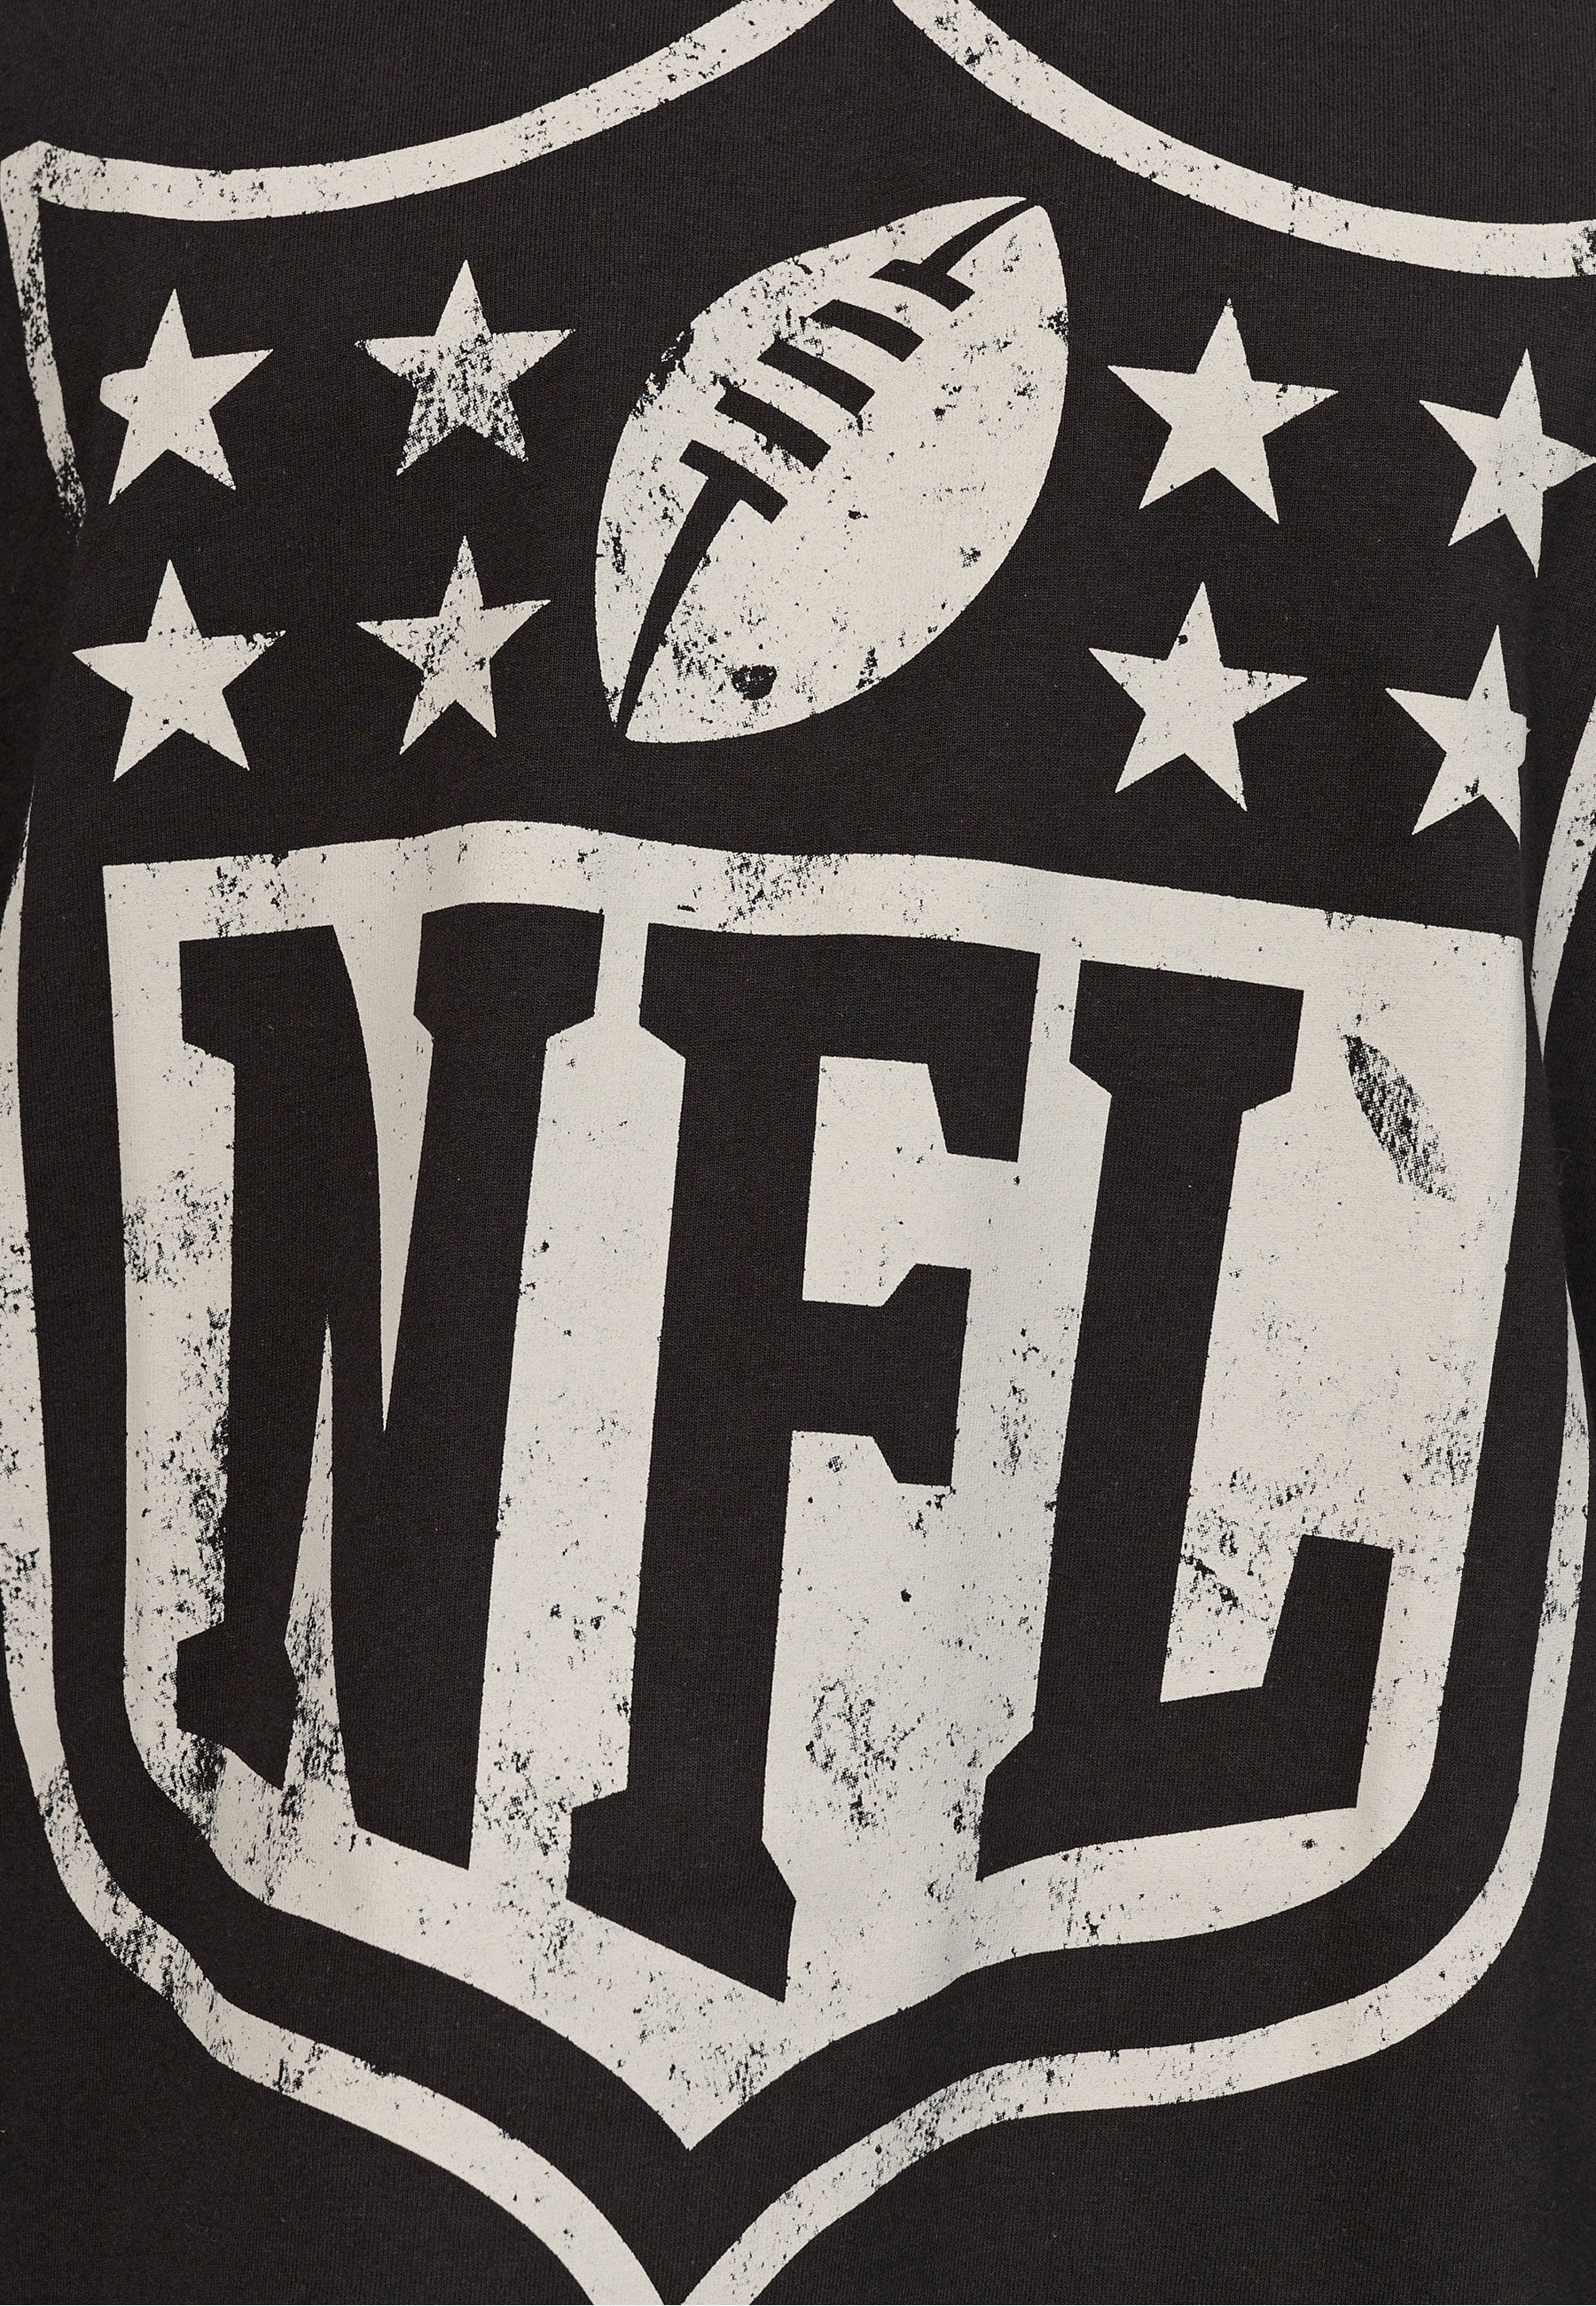 NFL Jersey T-Shirt Mens Adults American Football Shield Logo Black